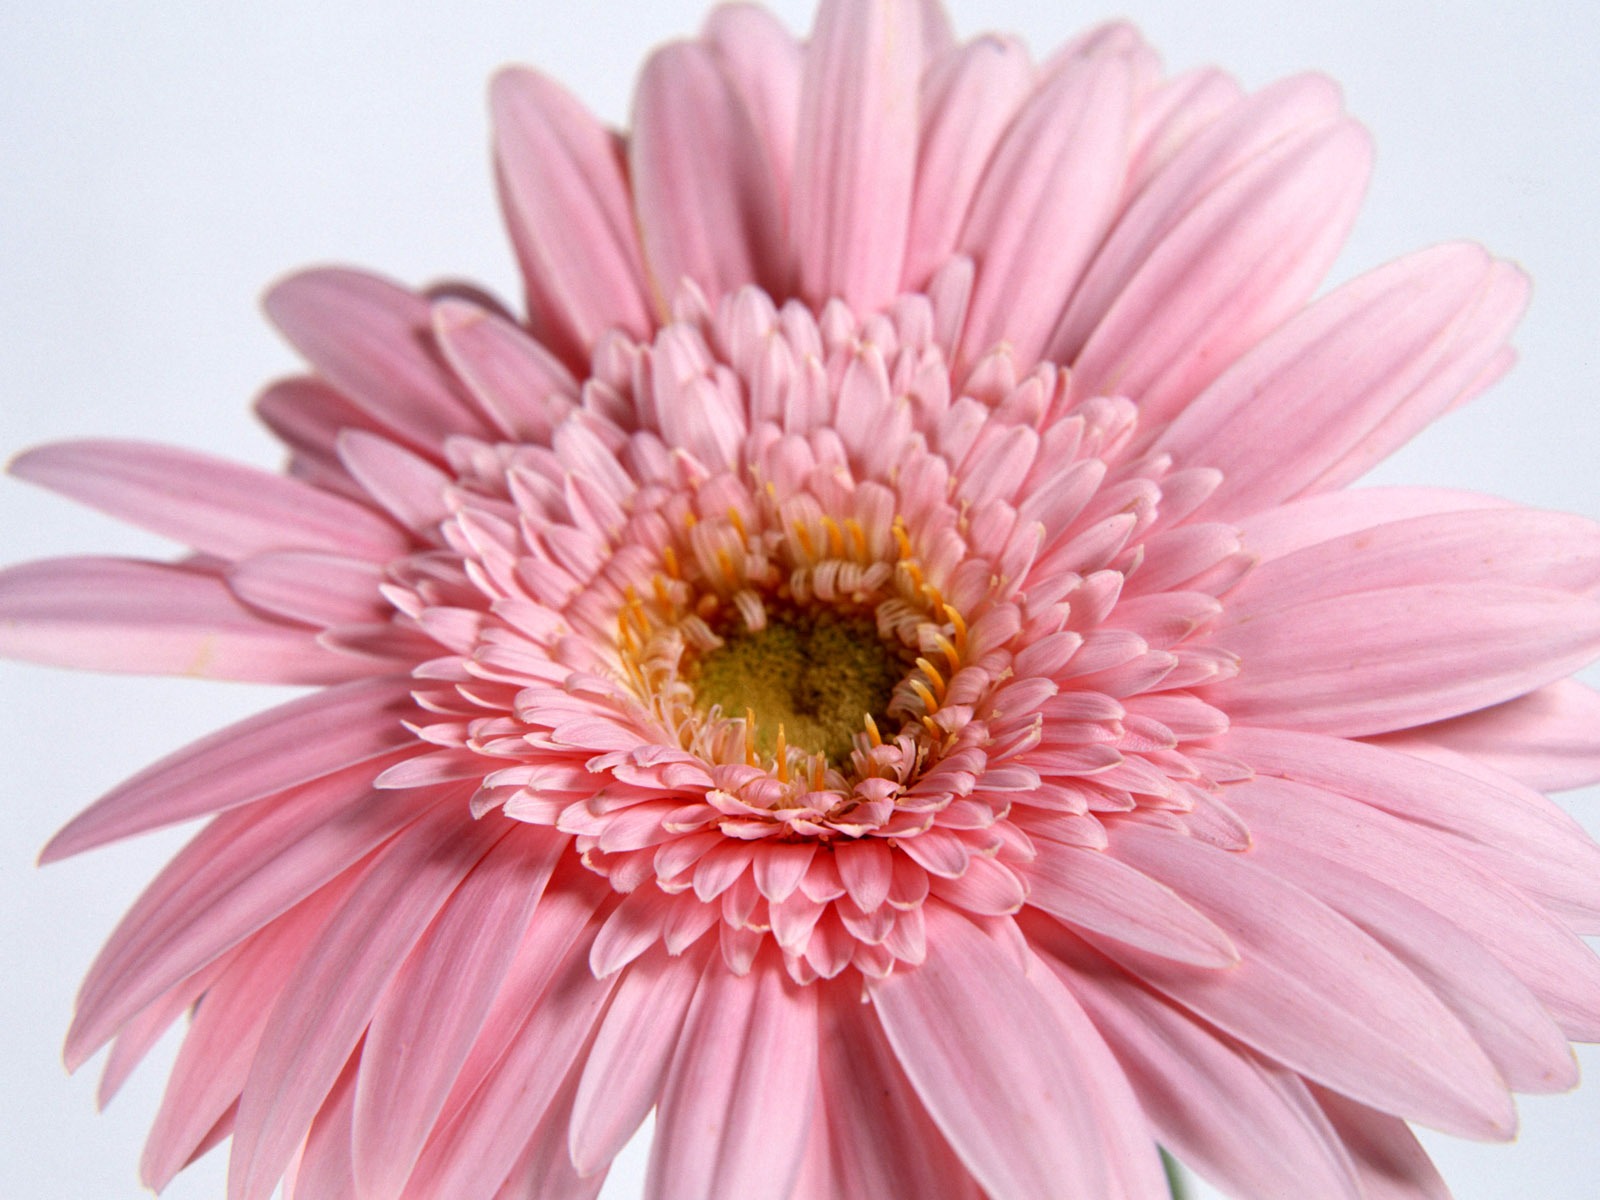 Flowers close-up (15) #1 - 1600x1200